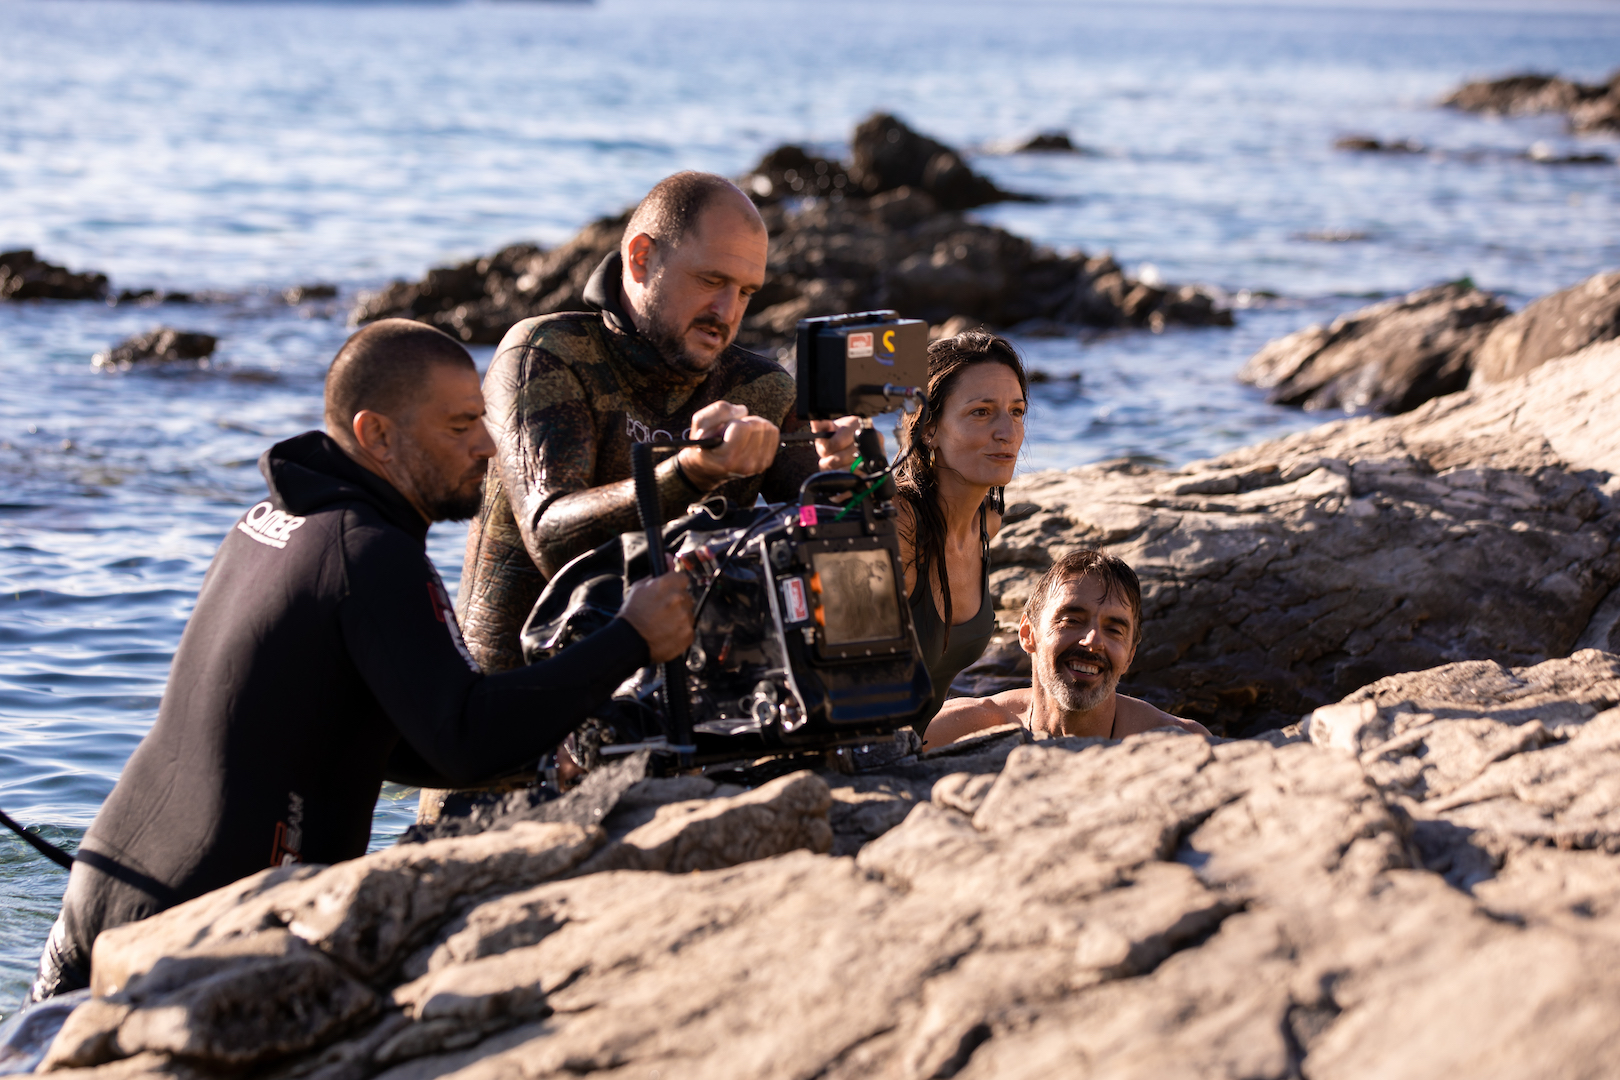 Oscar winner wraps shooting film on Croatian island 